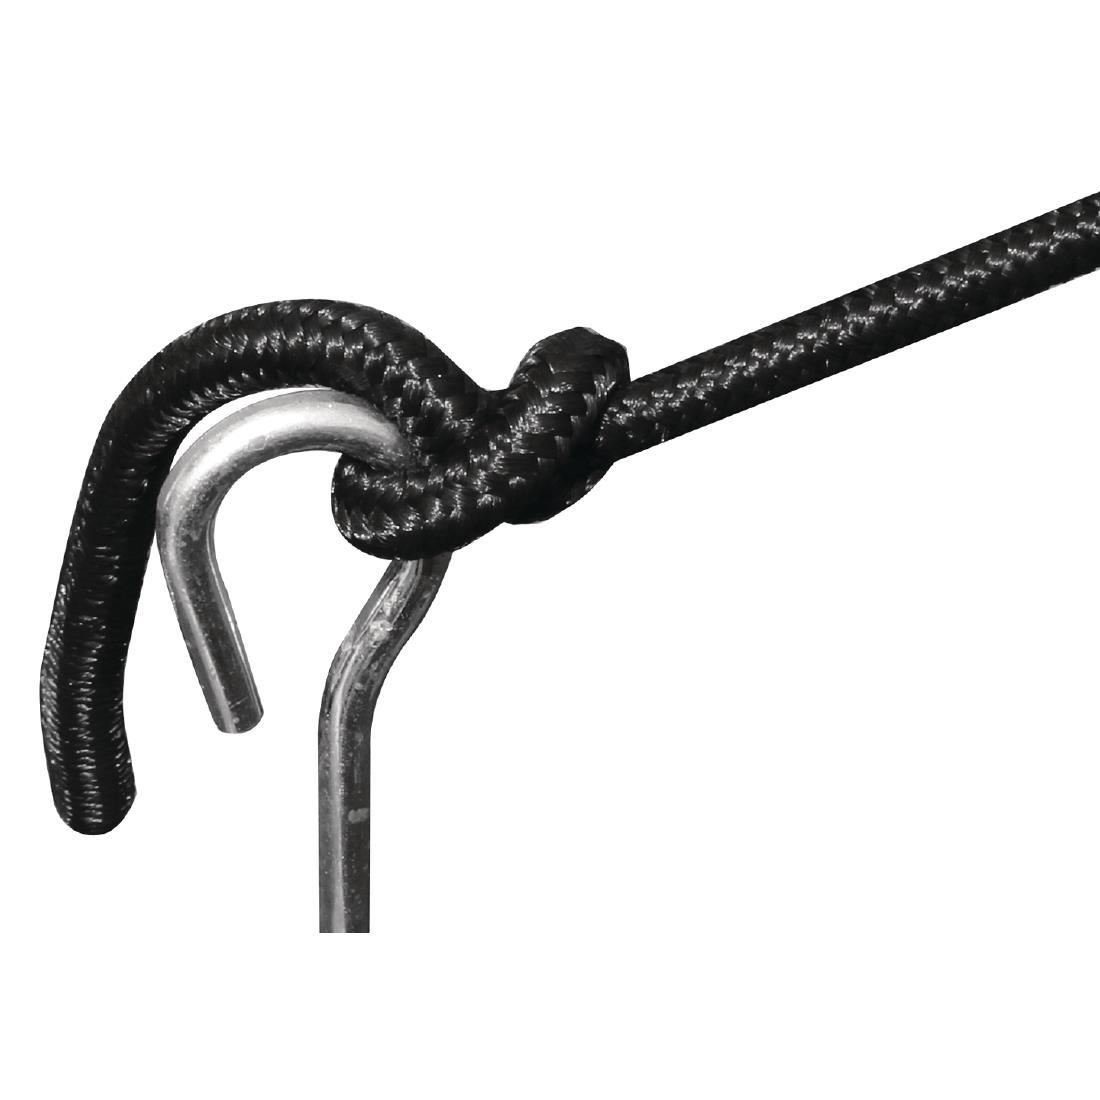 Pegs and Ropes for Aluminium Gazebo - GJ774  - 2